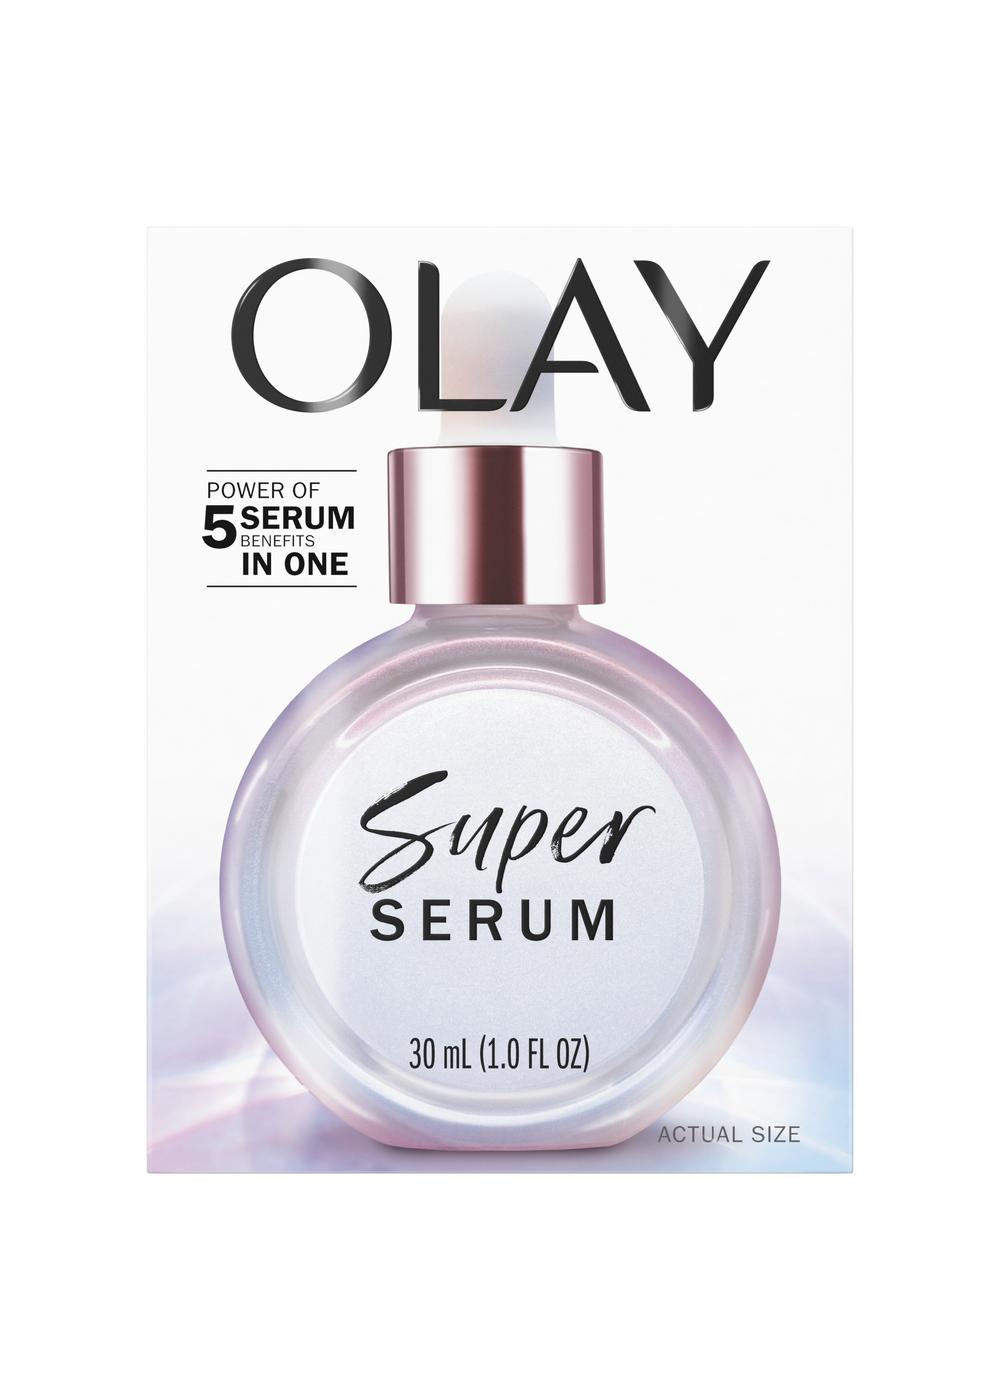 Olay Super Serum; image 1 of 5